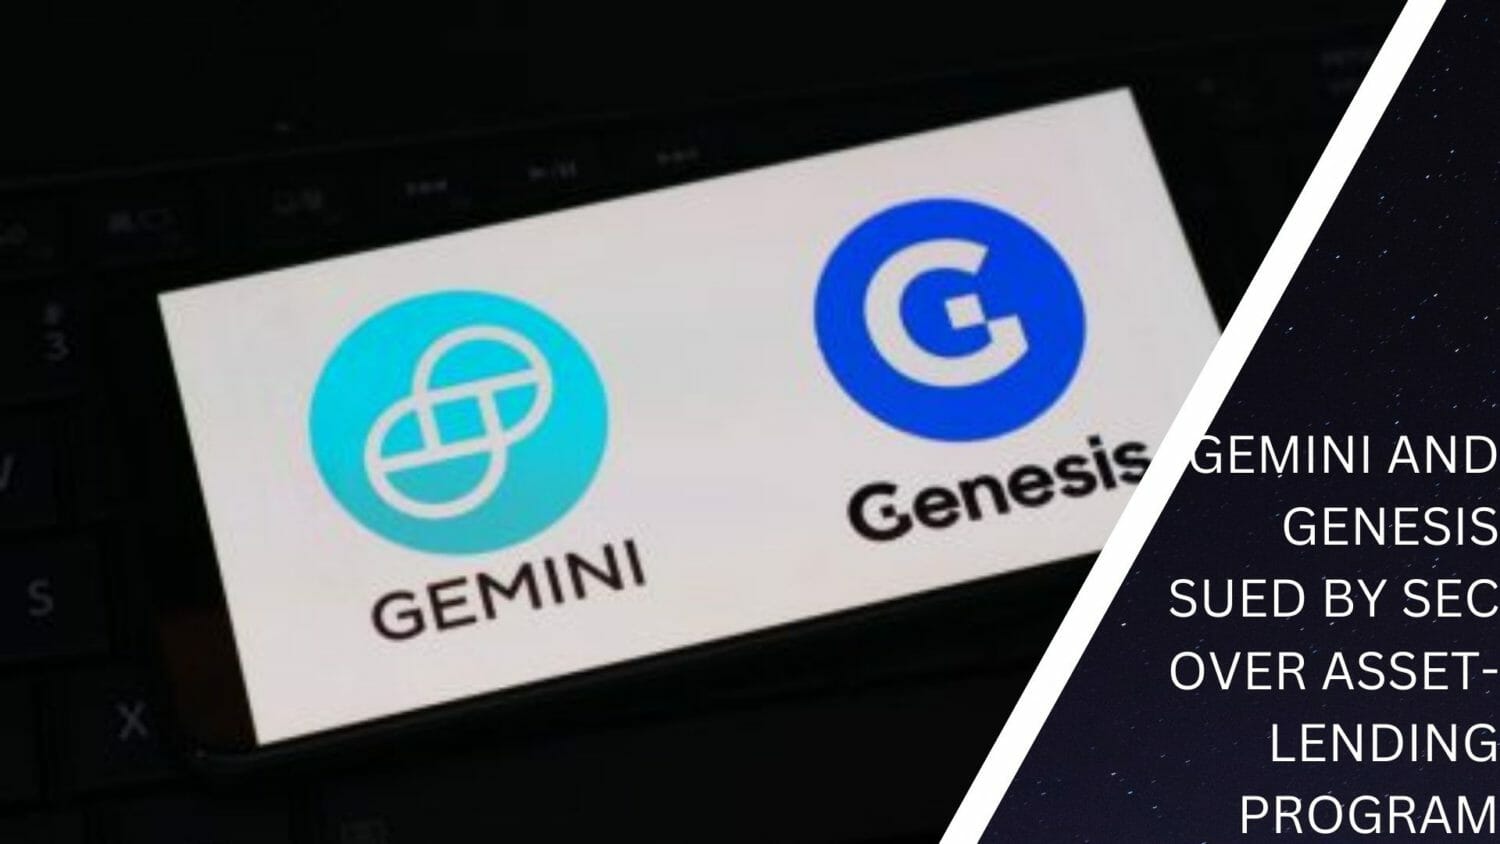 Gemini And Genesis Sued By Sec Over Asset-Lending Program